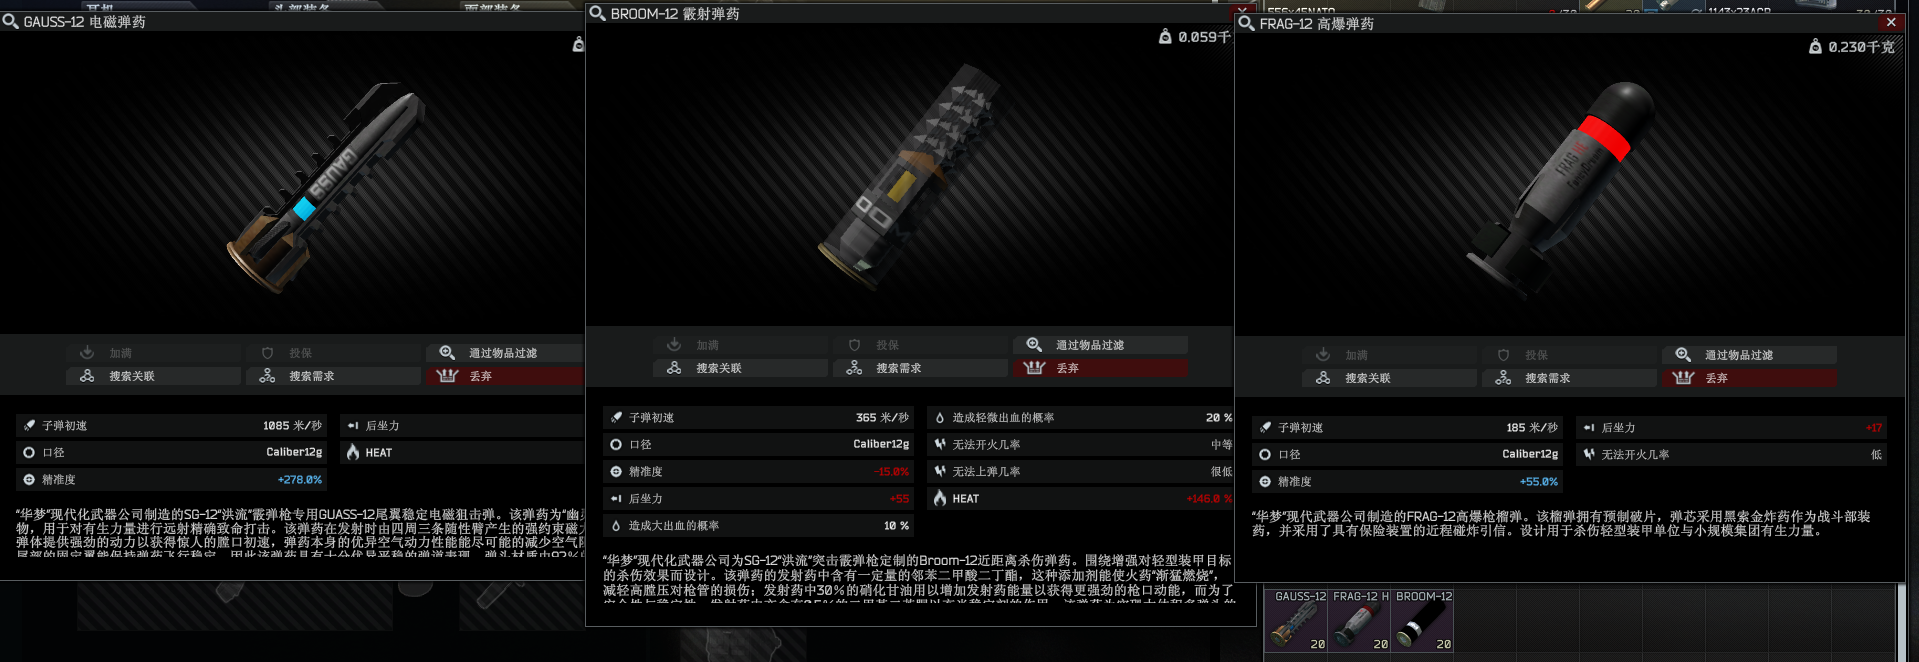 【SPT-AKI2.0.0~3.1.1全兼容】【华梦】【改模独立武器】SG-12″洪流”突击霰弹枪+三种定制弹药